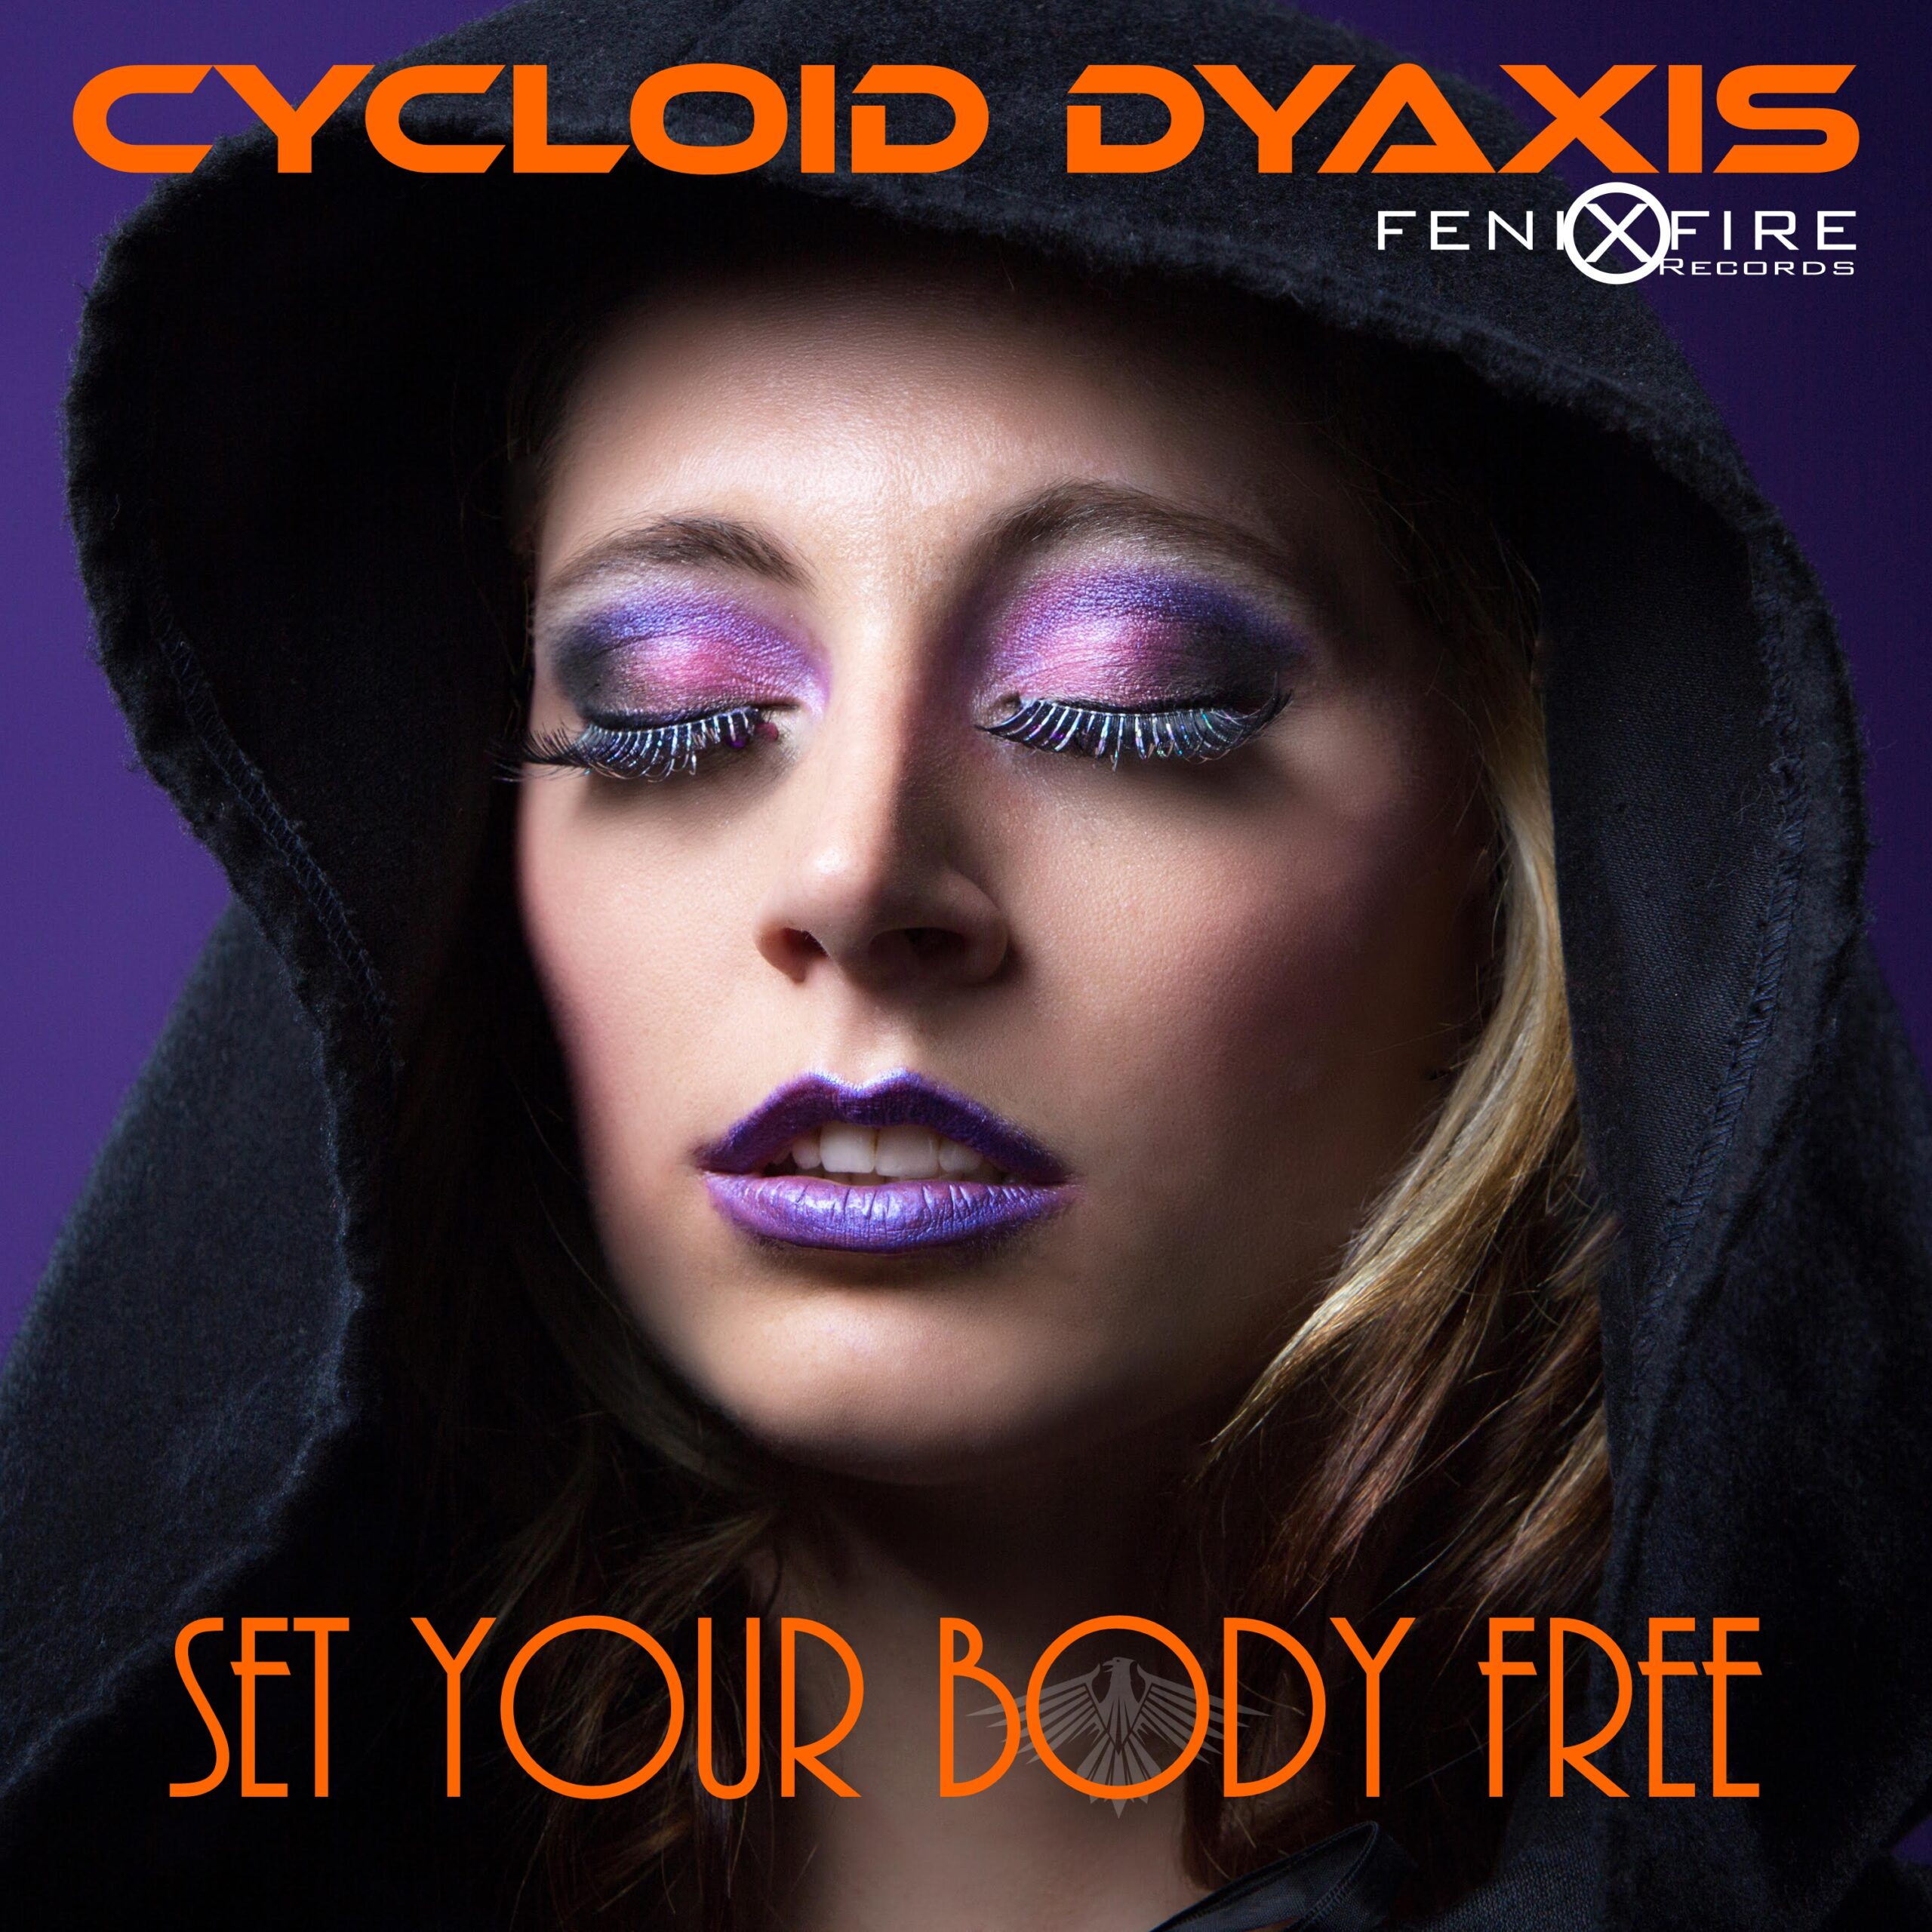 Cycloid Dyaxis - Set Your Body Free [Fenixfire Records]